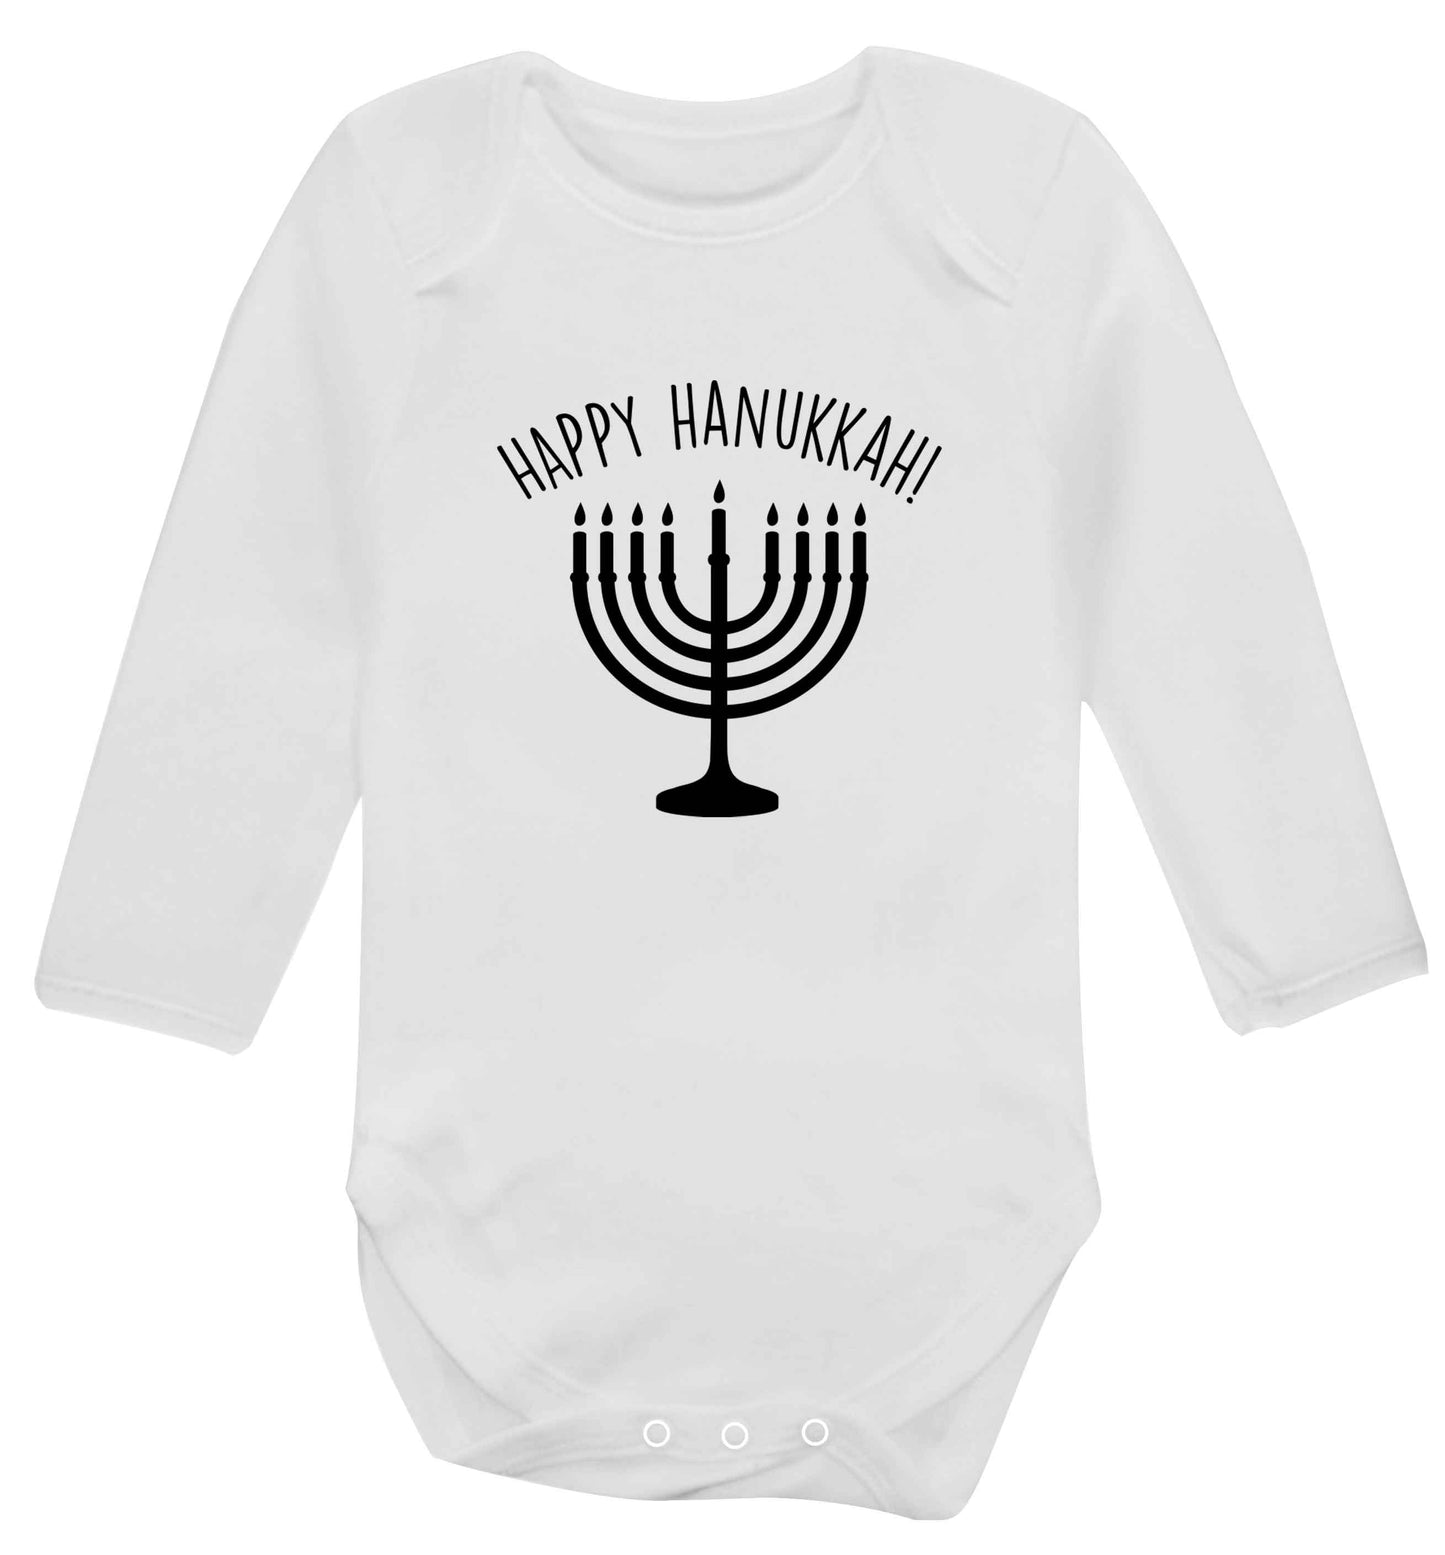 Happy hanukkah baby vest long sleeved white 6-12 months